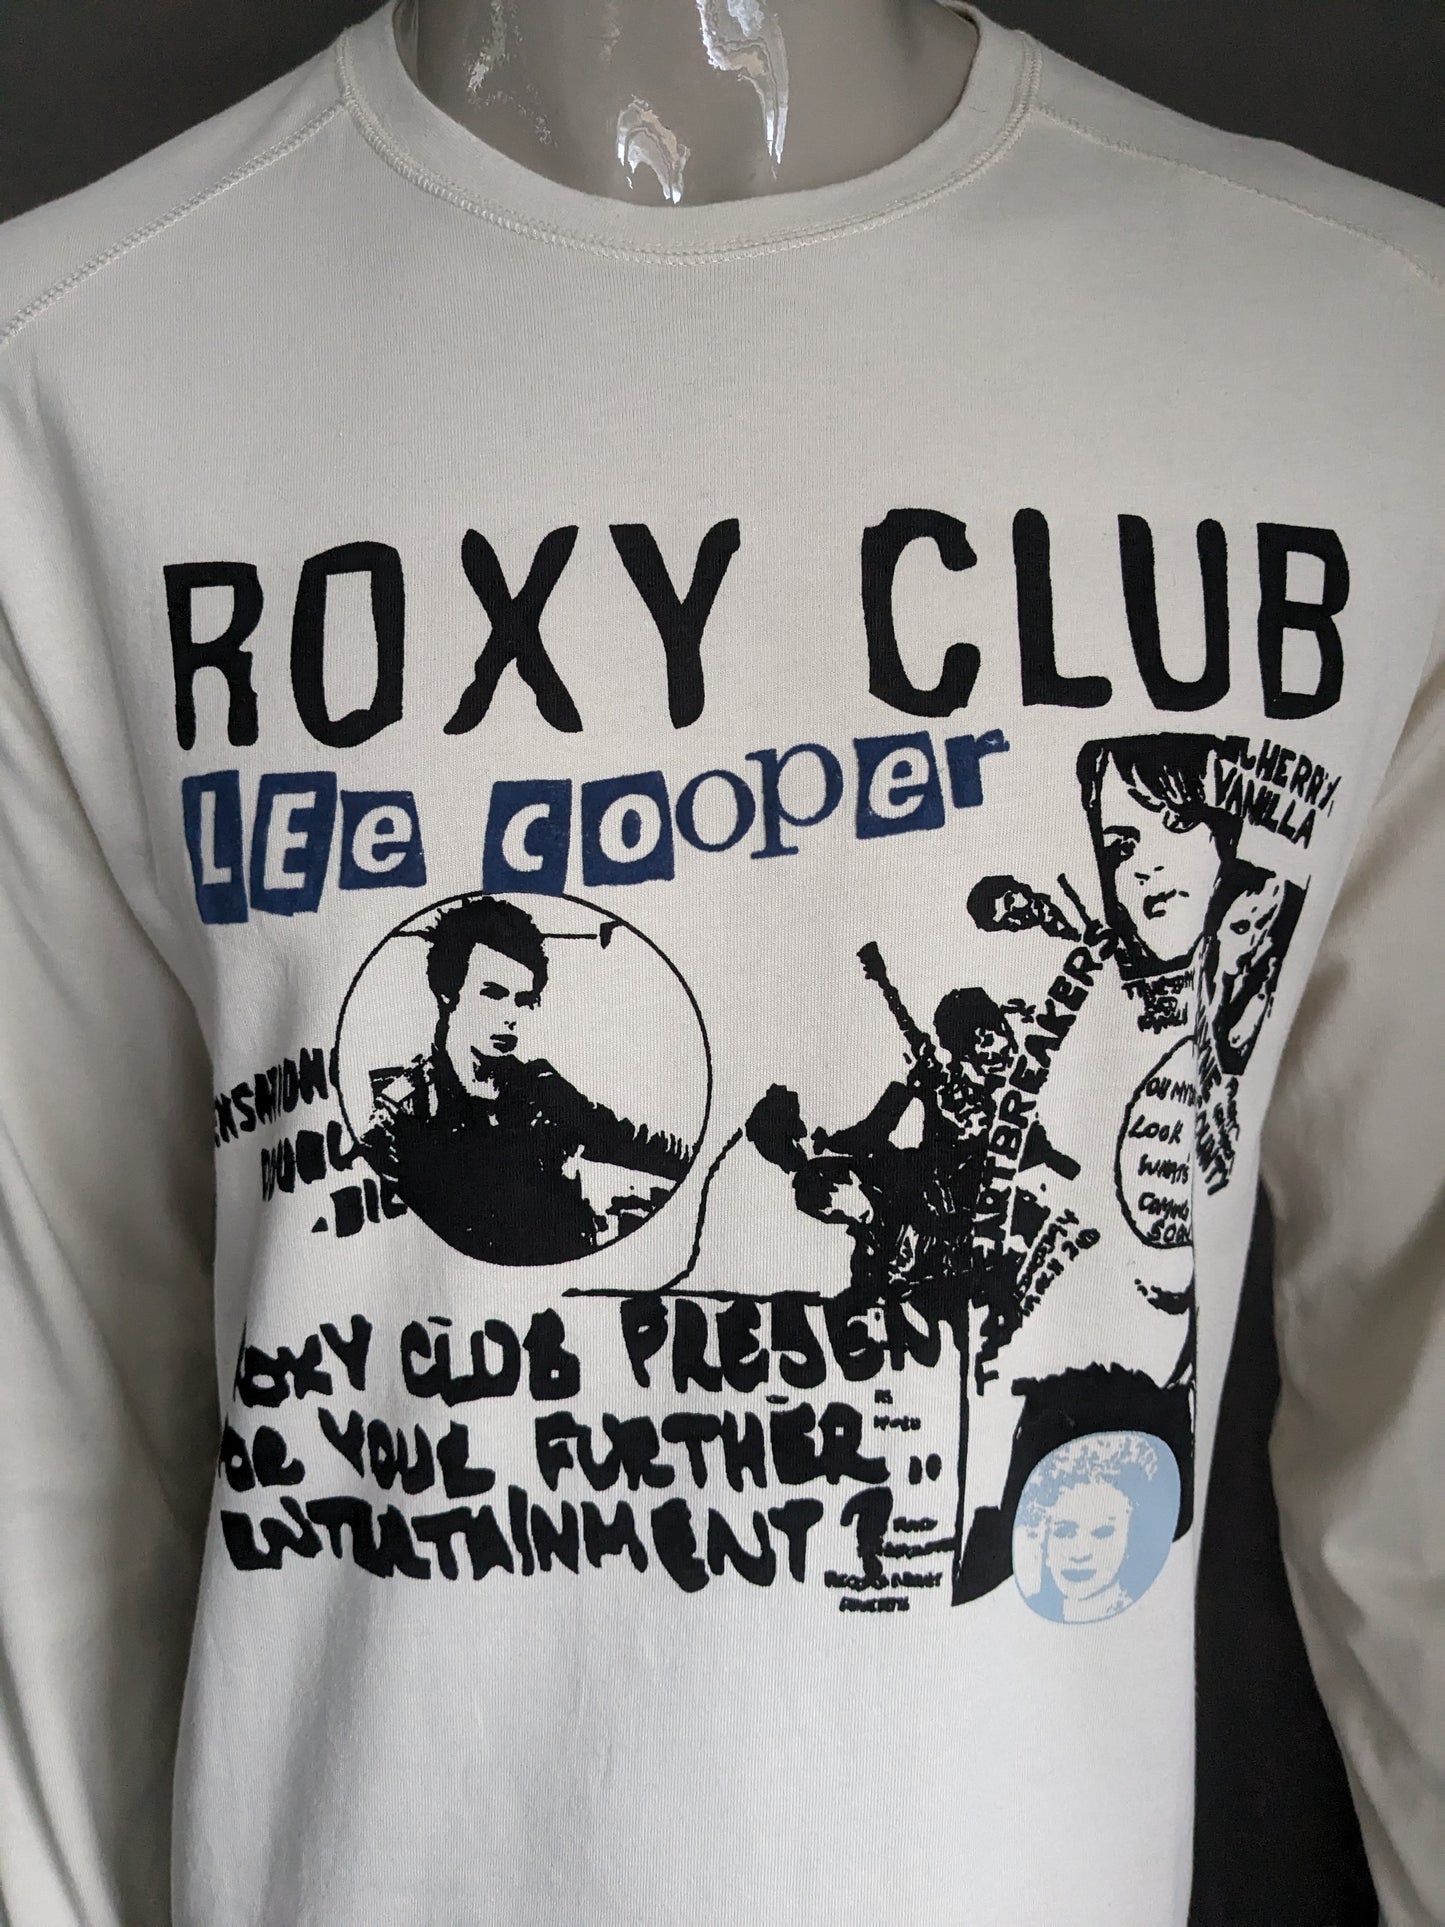 Lee Cooper "Roxy Club" Longsleeve. Beige con impresión. Tamaño xl.